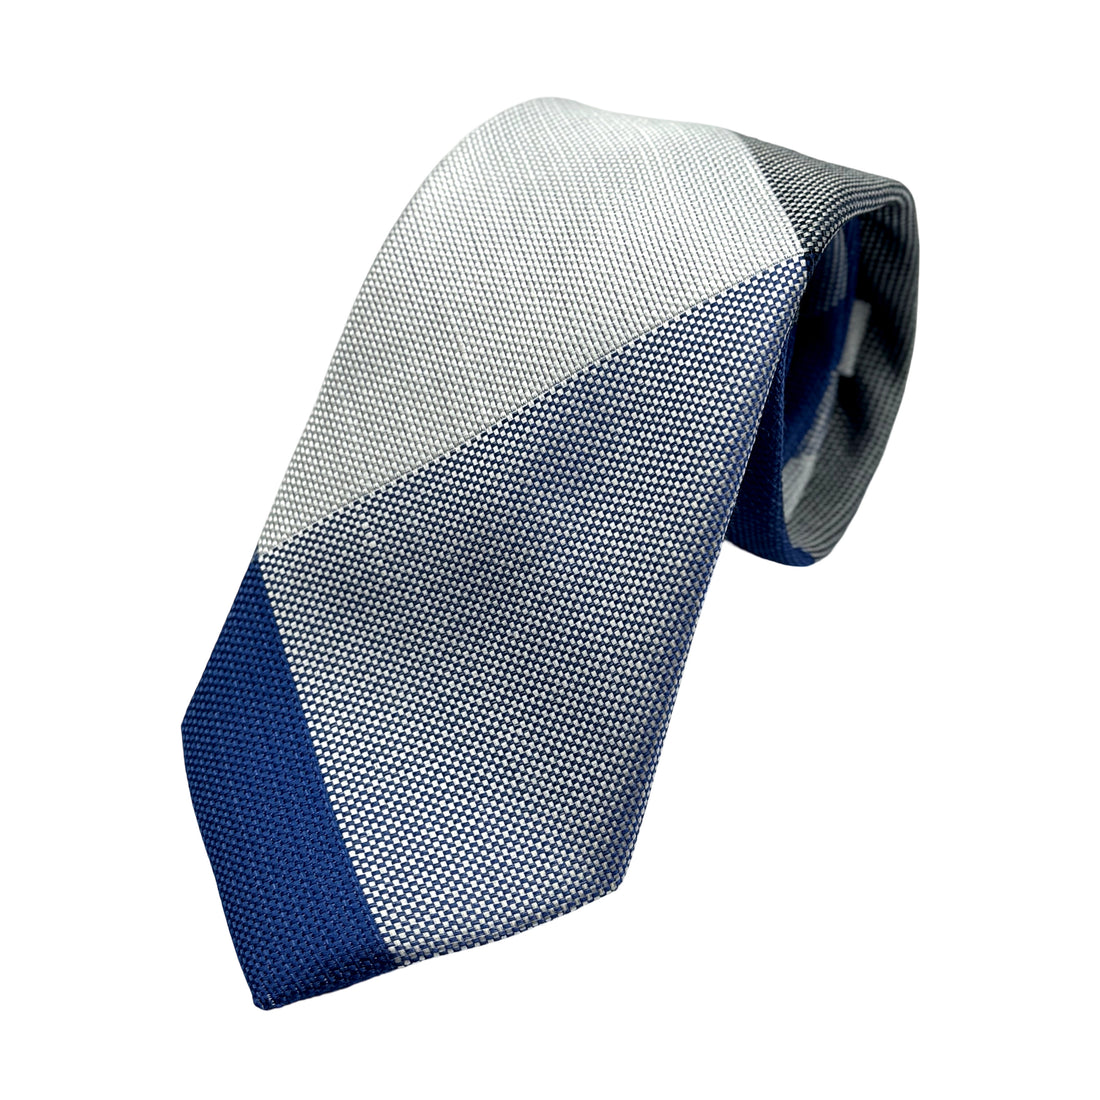 James Adelin Mens Luxury Silk/Linen Blend Neck Tie in Textured Check Weave Design